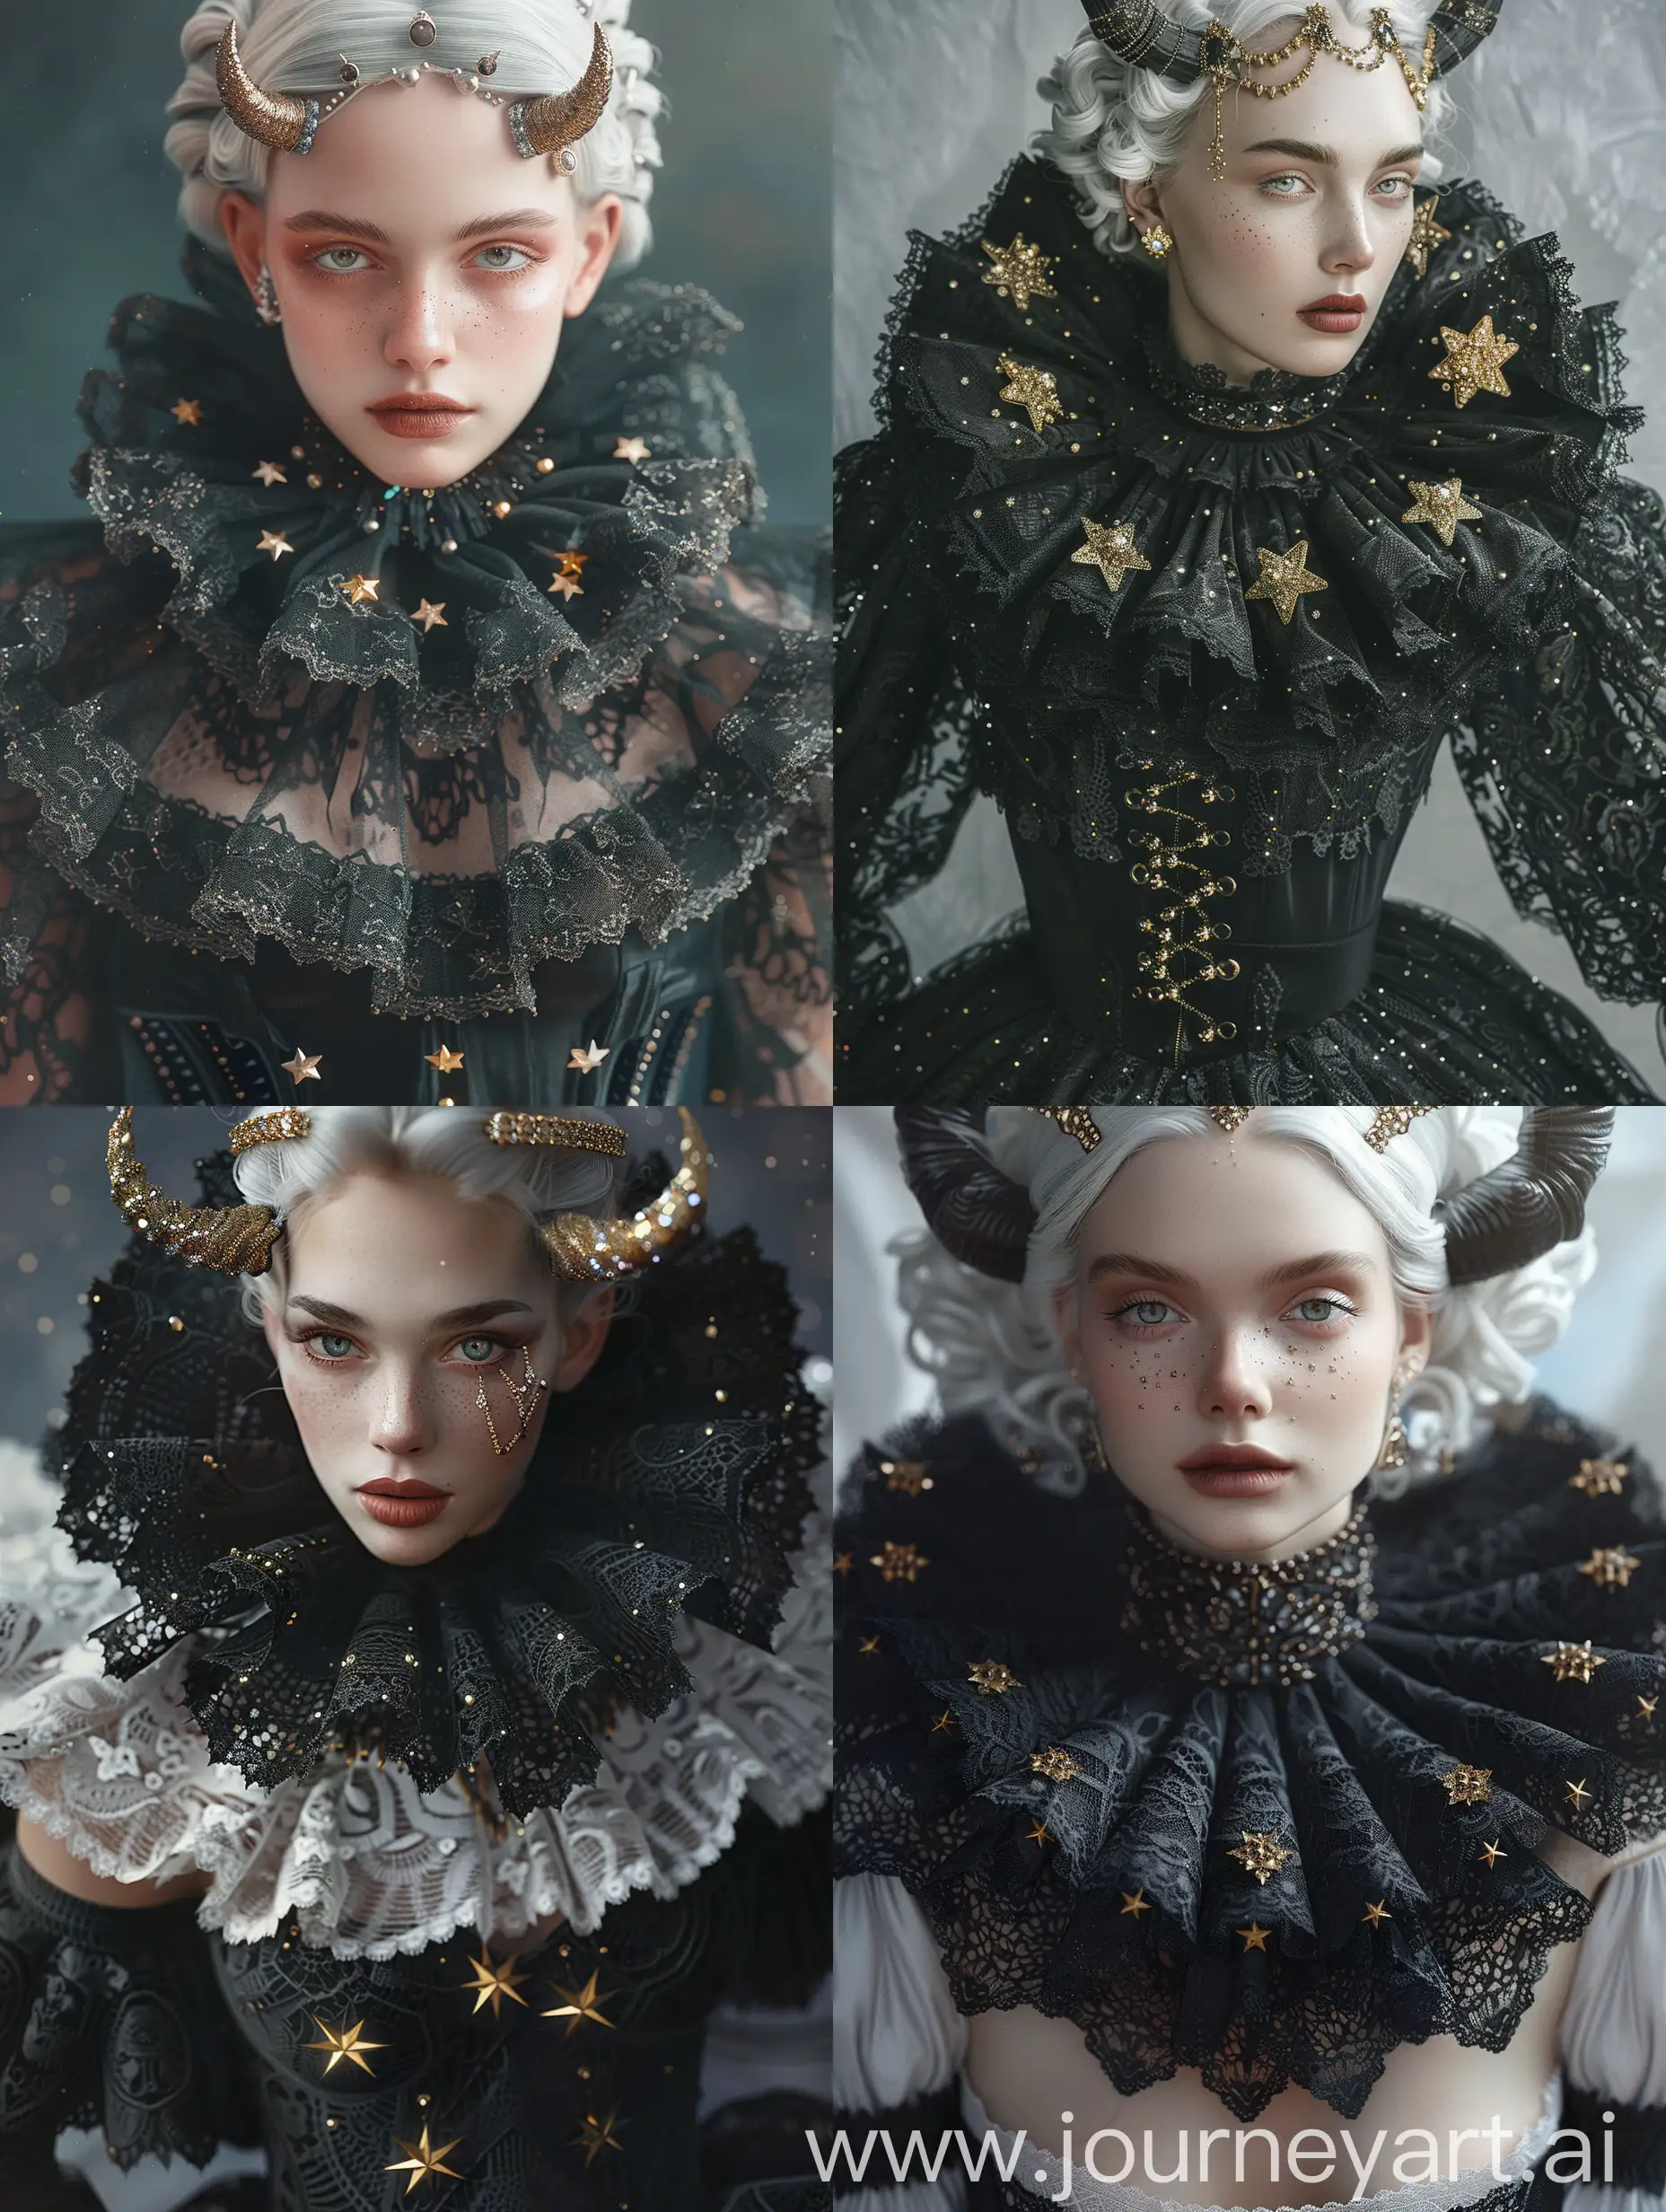 Gothic-Woman-Portrait-Graceful-Figure-in-Lavish-Black-Lace-Attire-with-Jeweled-Adornments